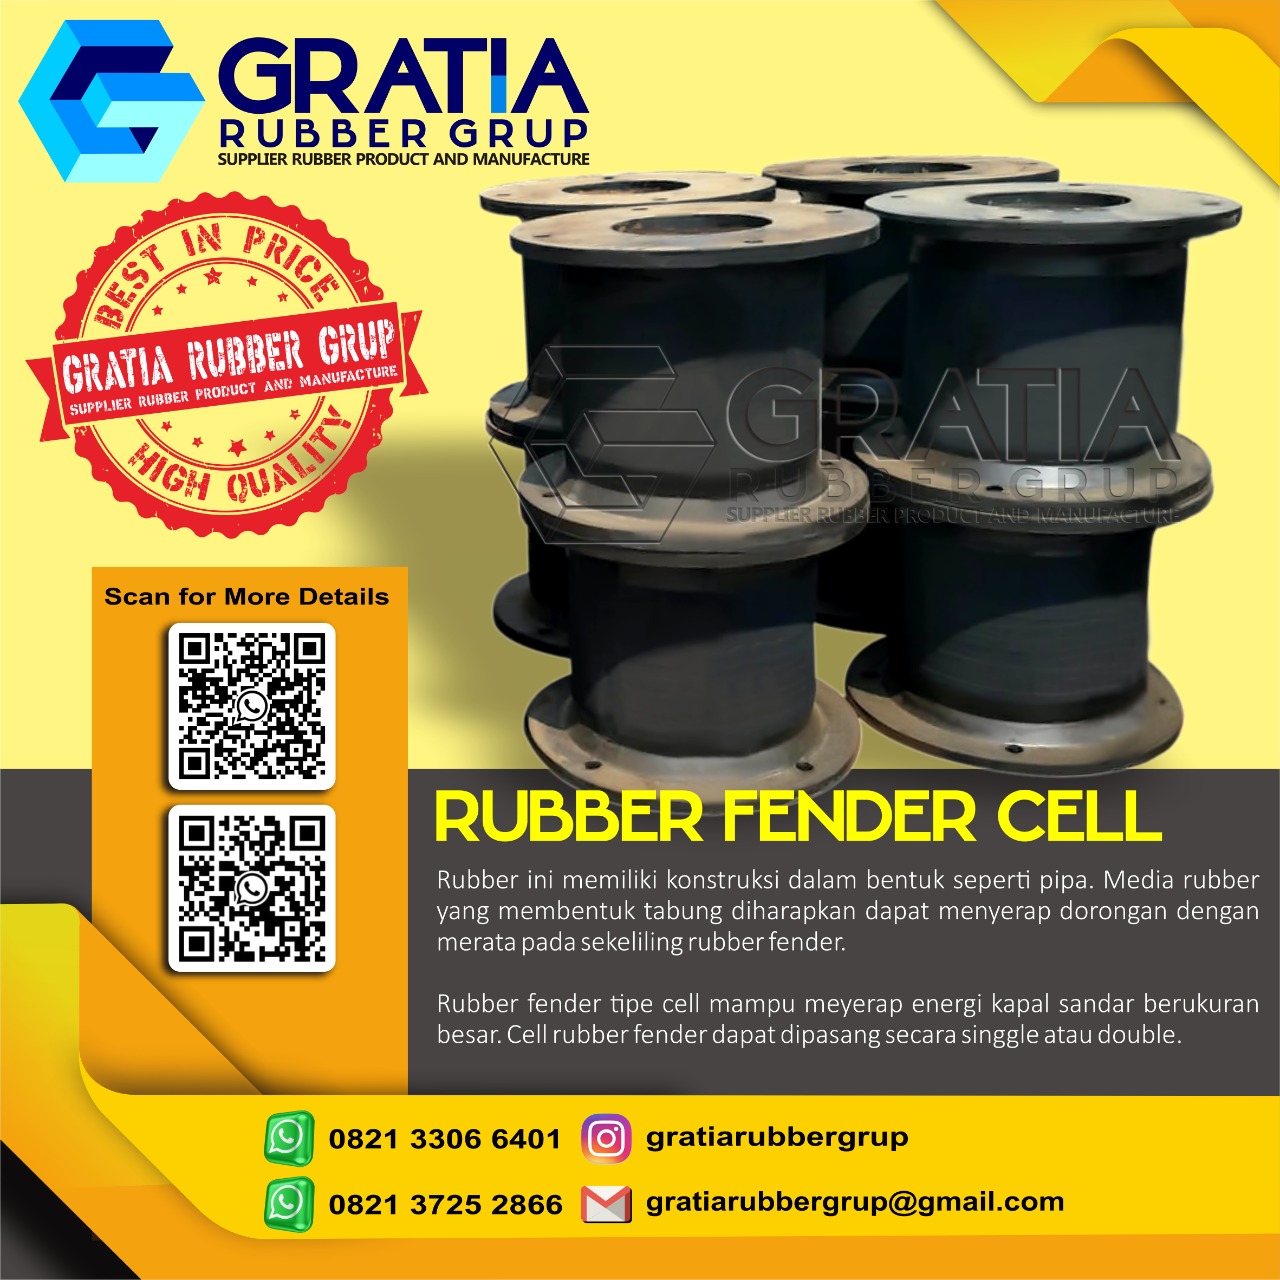 Pusat Rubber Fender Terbaik Melayani Pengiriman Ke Surabaya Jawa Timur Hub 0821 3306 0461